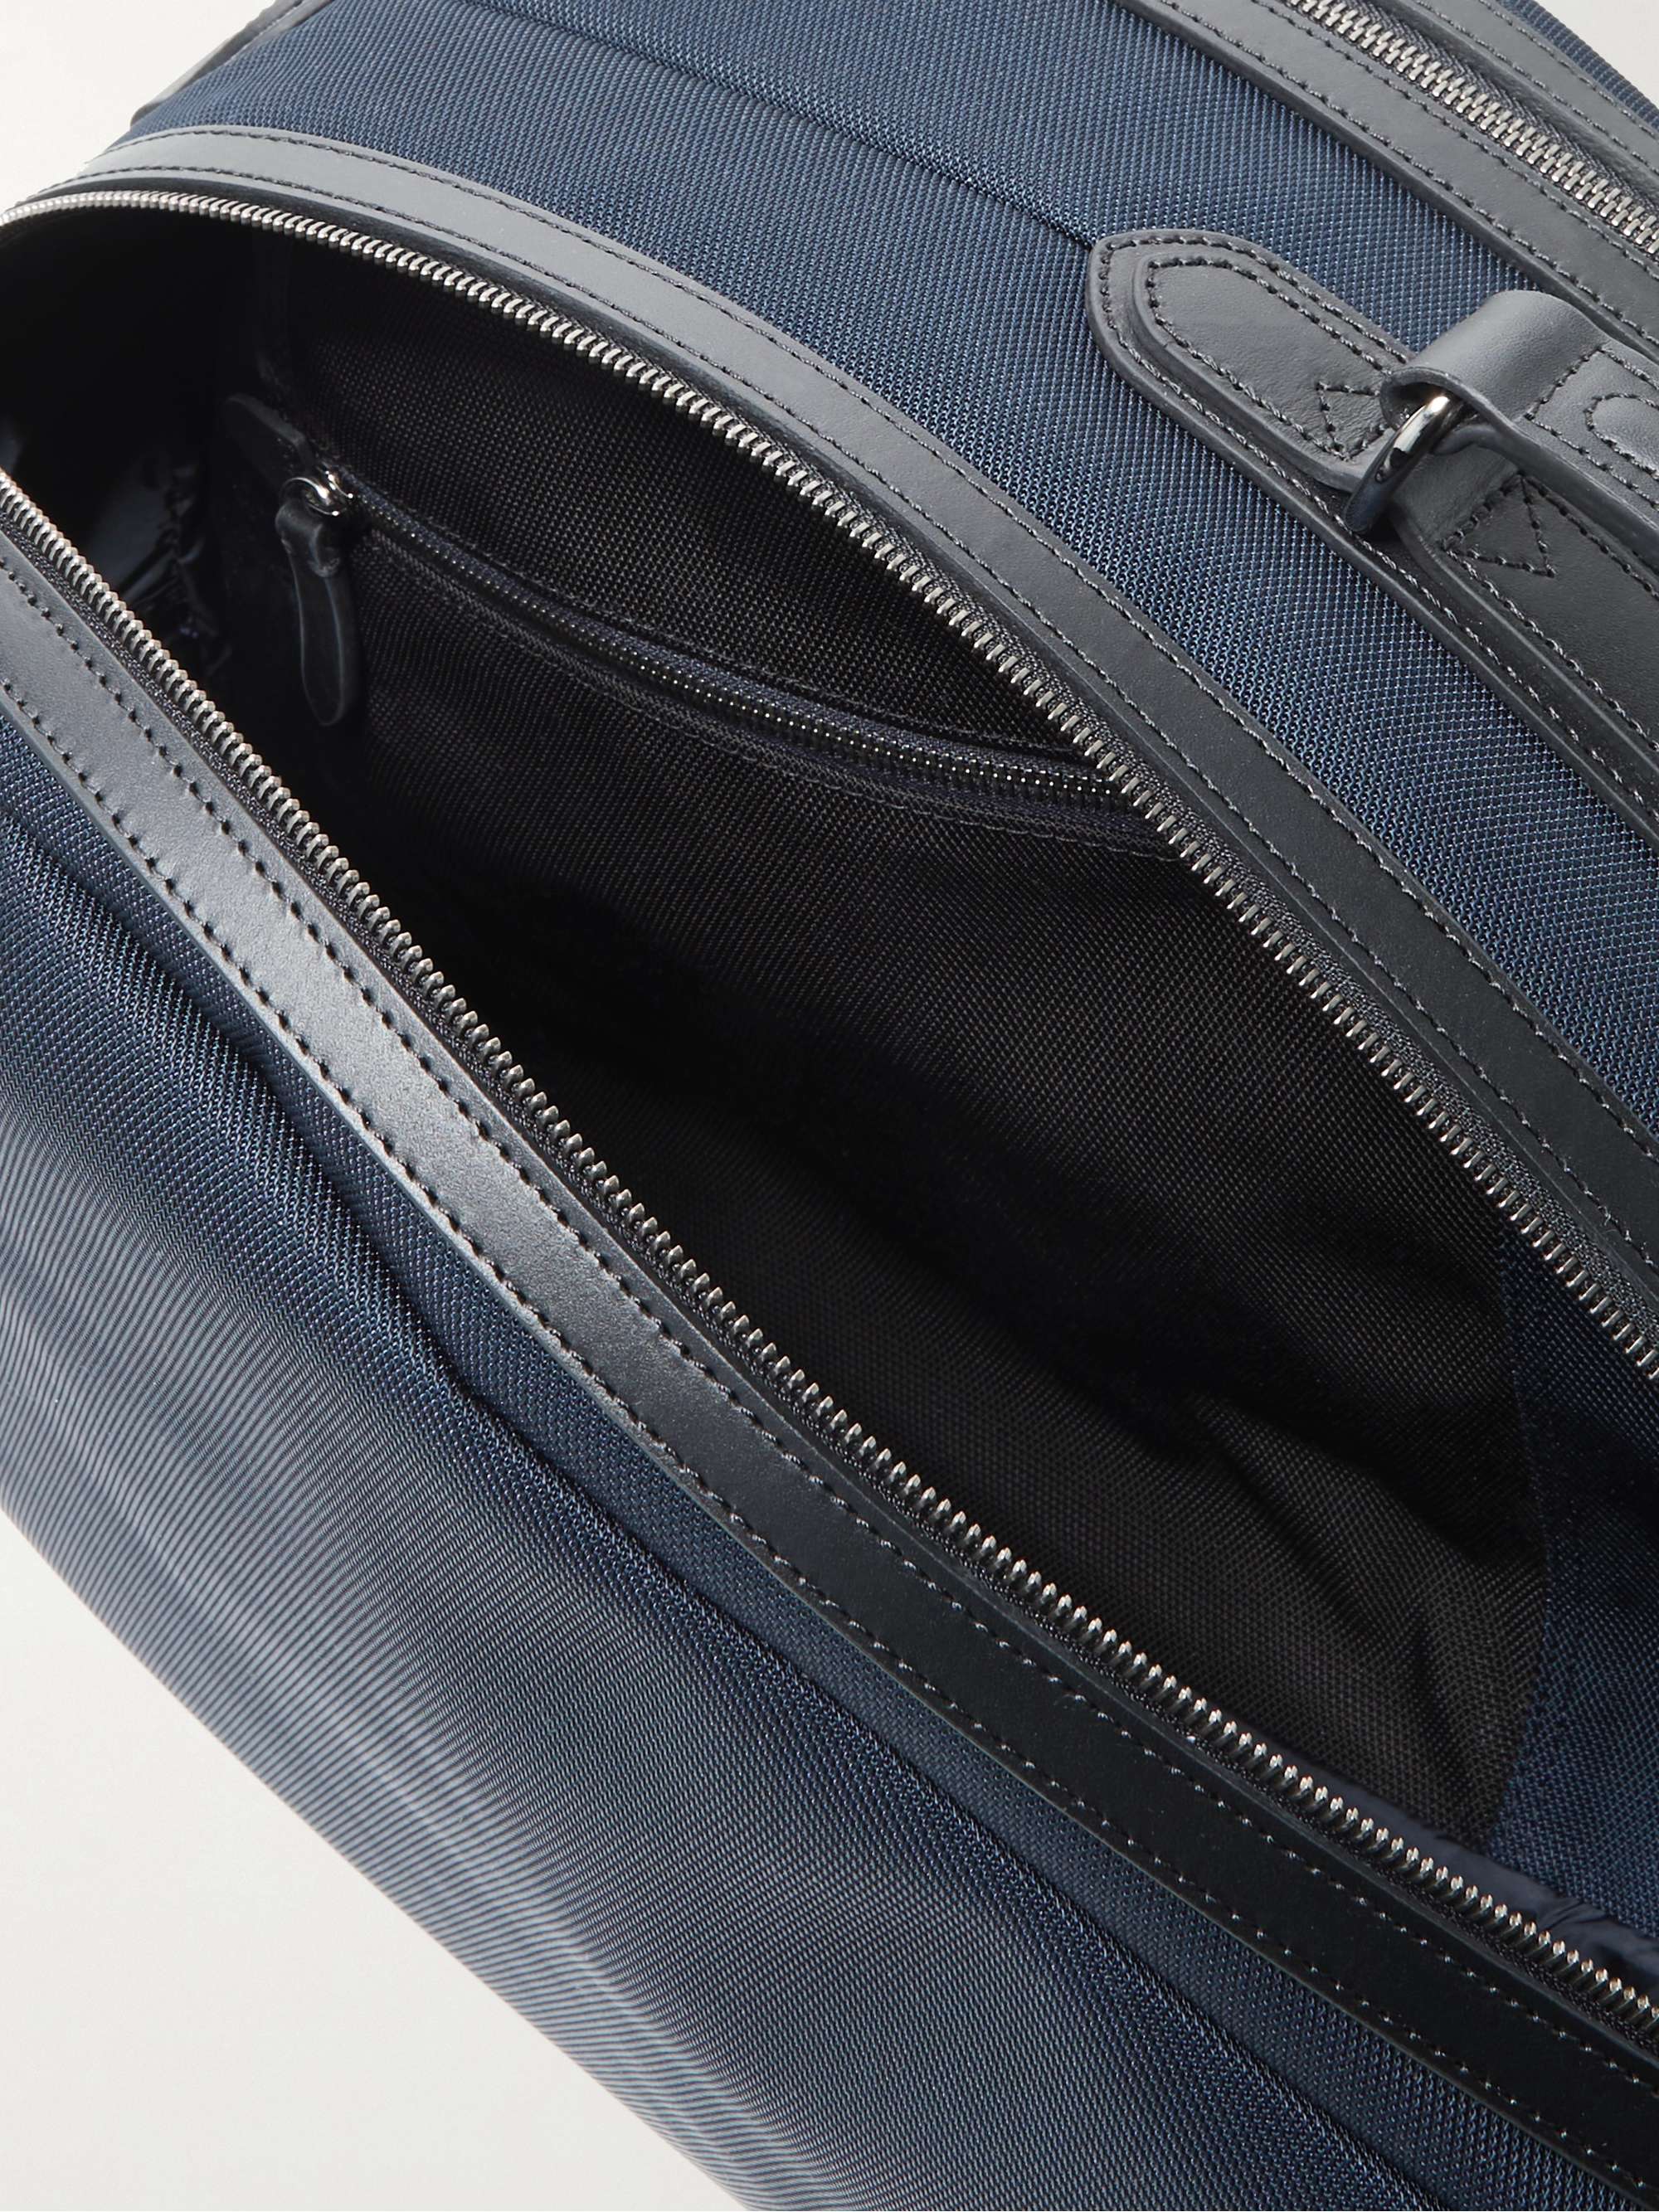 MISMO Leather-Trimmed Ballistic Nylon Tennis Bag